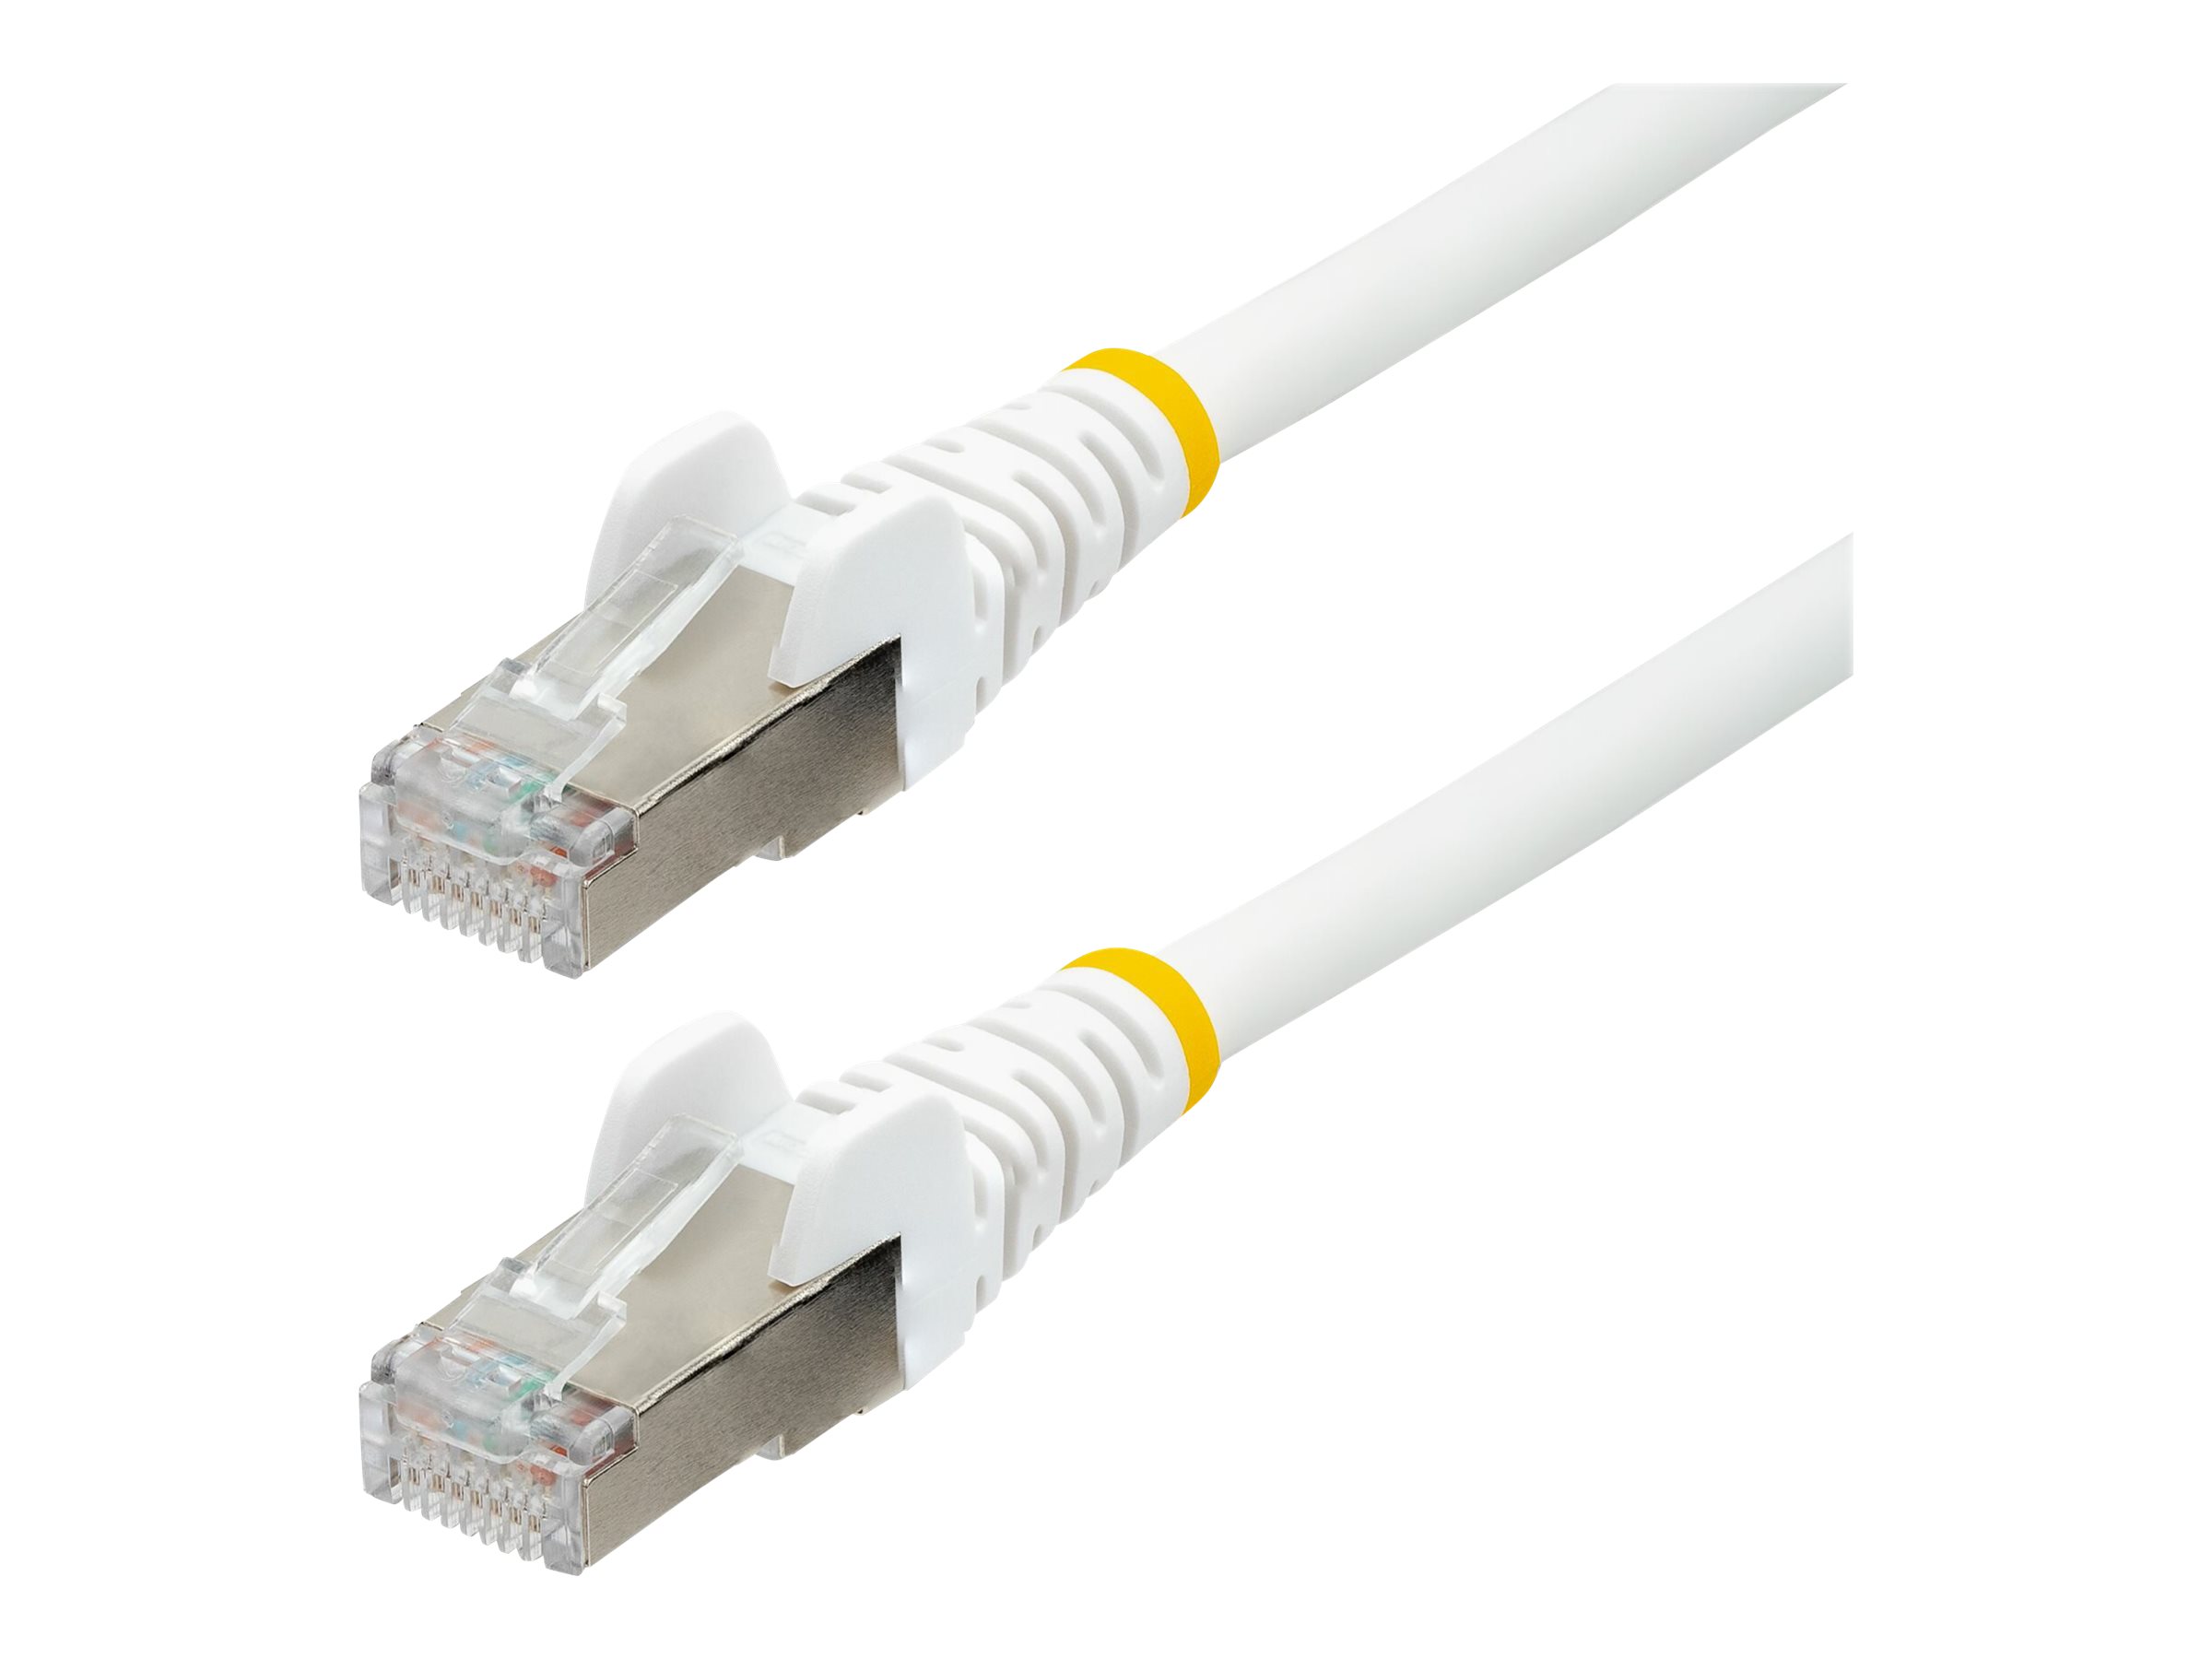 StarTech.com 7.5m CAT6a Ethernet Cable - White - Low Smoke Zero Halogen (LSZH) - 10GbE 500MHz 100W PoE++ Snagless RJ-45 w/Strain